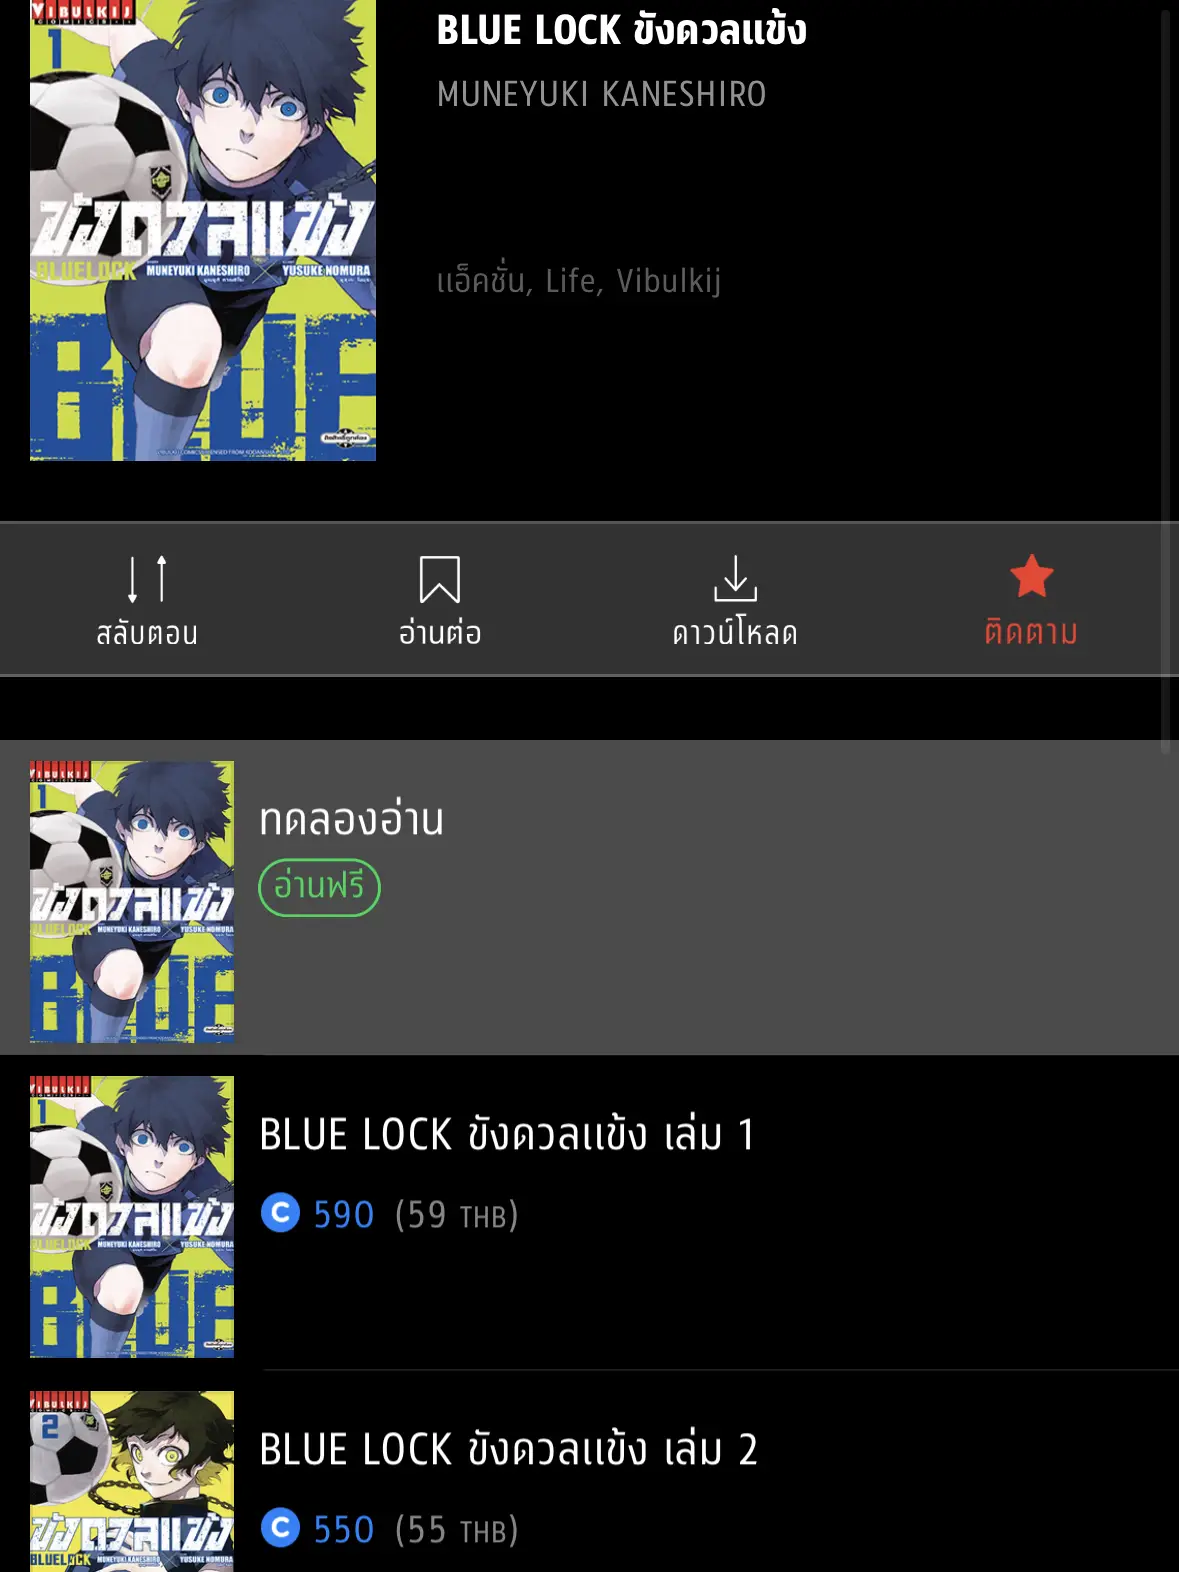 blue lock icons #bluelock #manga #bluelockmanga #bluelockedit #anime #